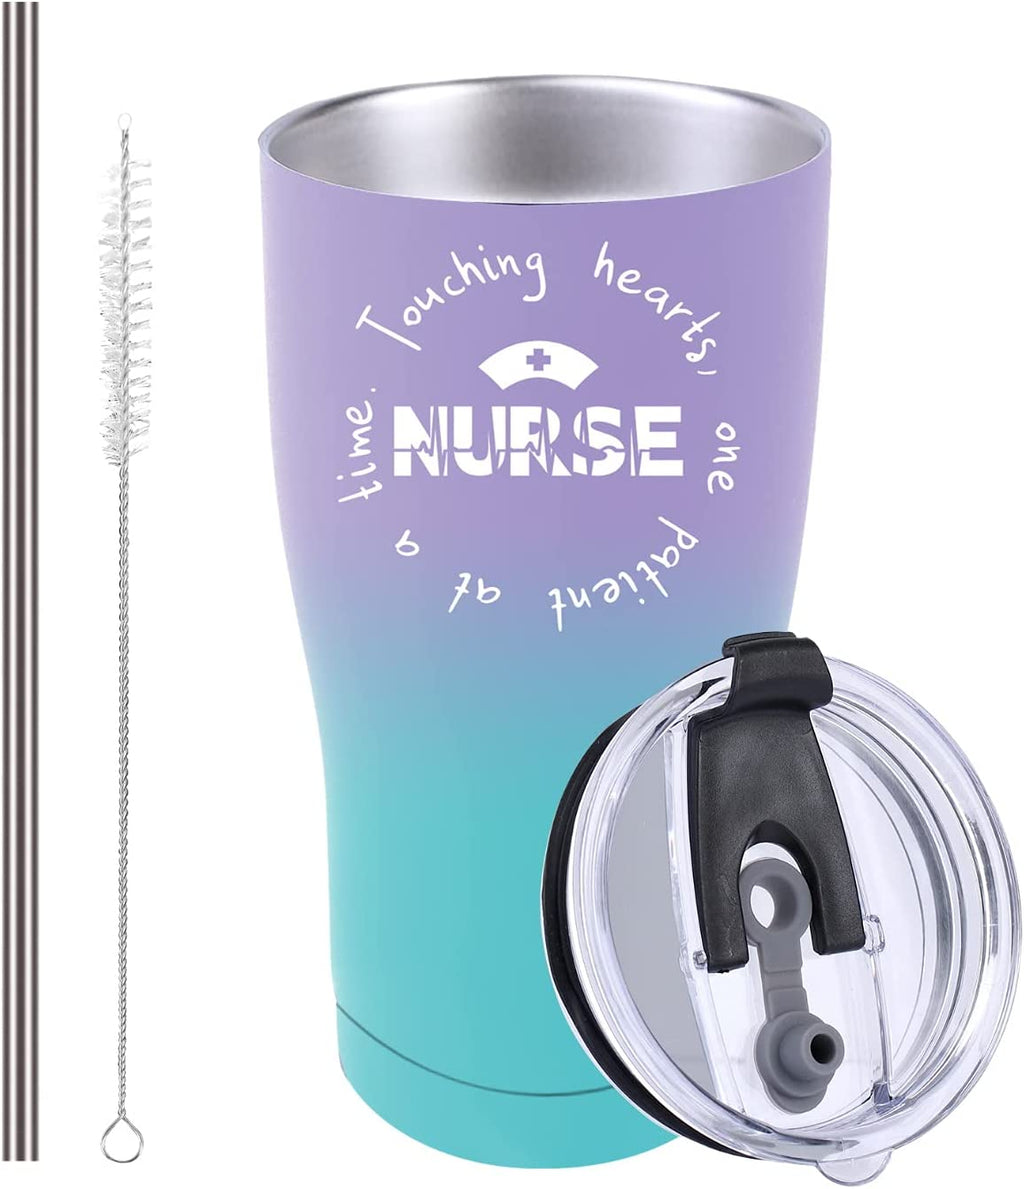 Nurse Gifts, Nurse Tumbler - Nurse, Touching Hearts, One Patient at a Time - Gifts for Nurses, Nurse Practitioner, Registered Nurse, Nurse Graduation Gift, Nurse Mug Cup (Green-Purple)